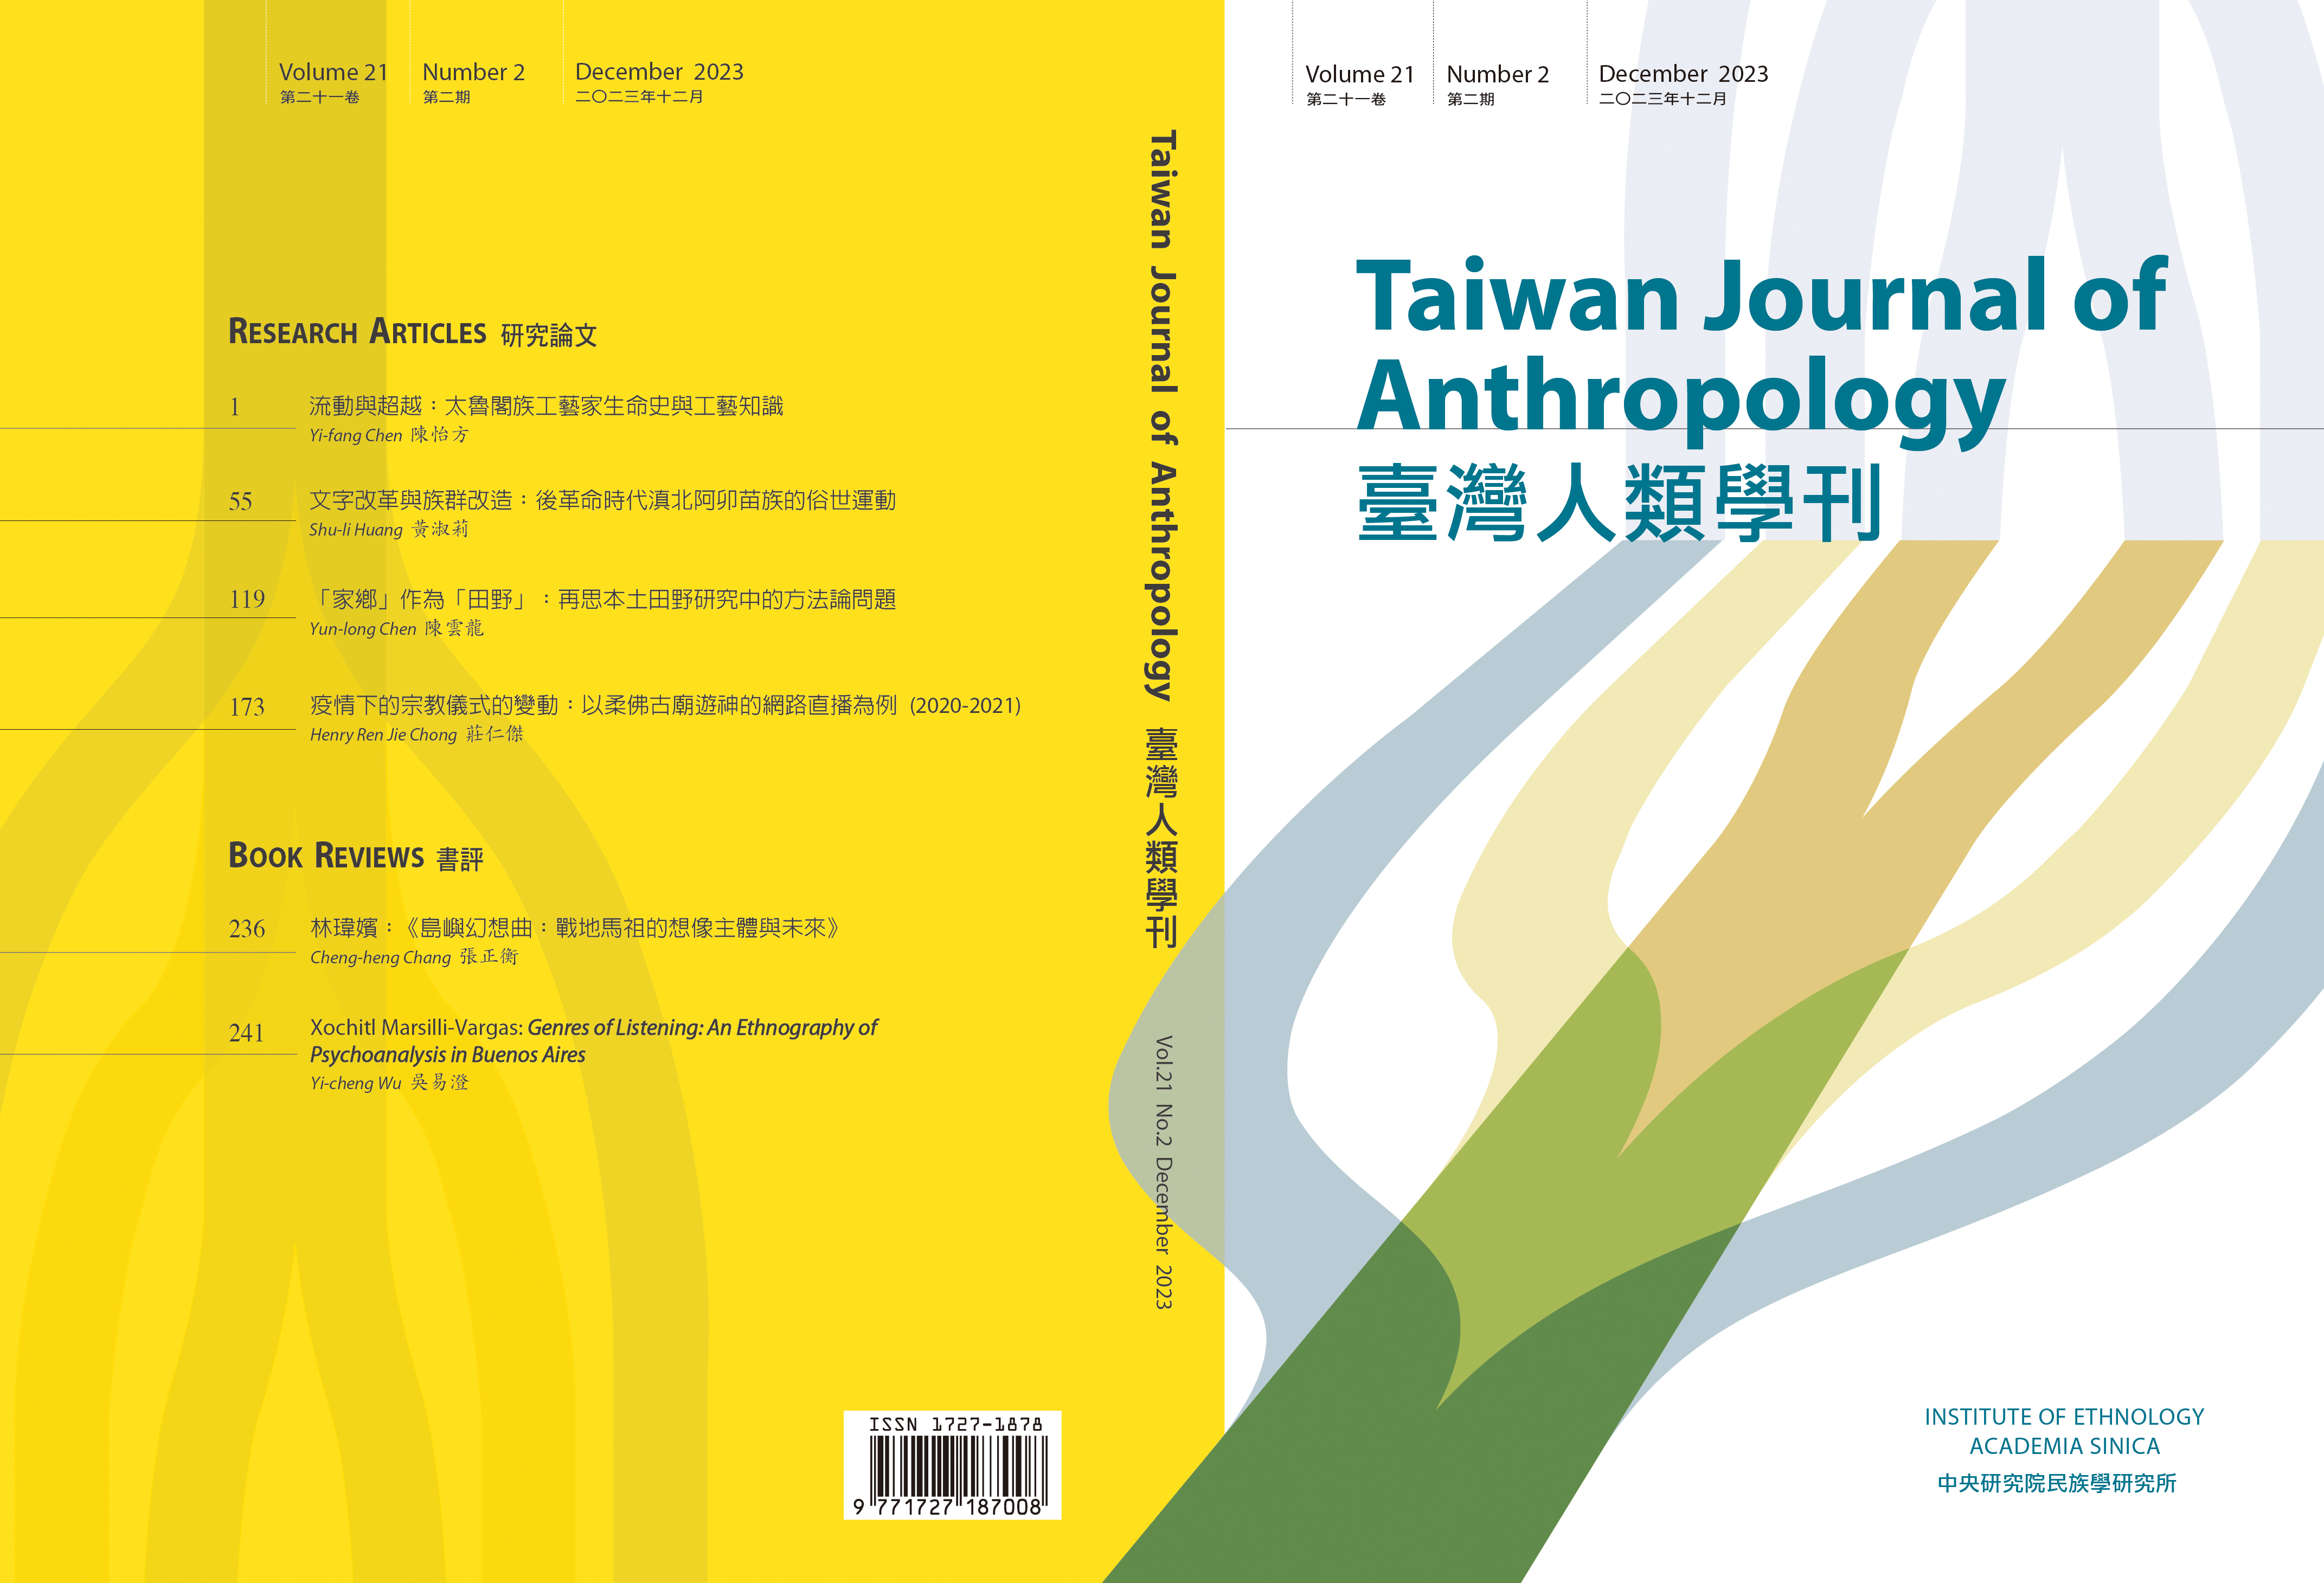 Taiwan Journal of Anthropology, Academia Sinica, Volume 21 No.2